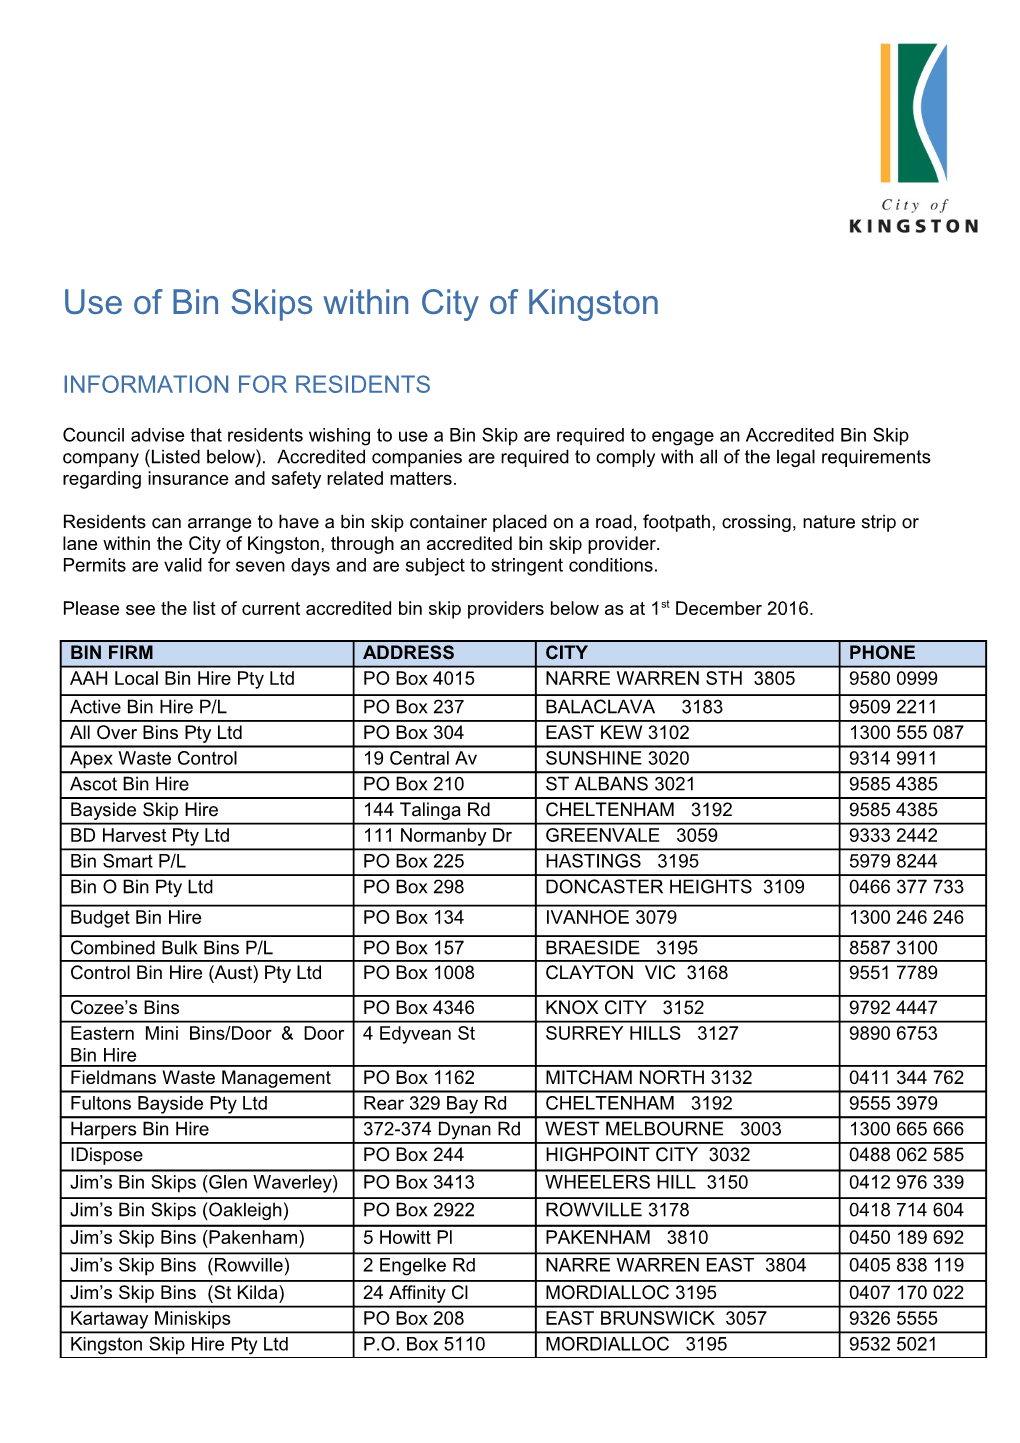 Use of Bin Skips Within City of Kingston